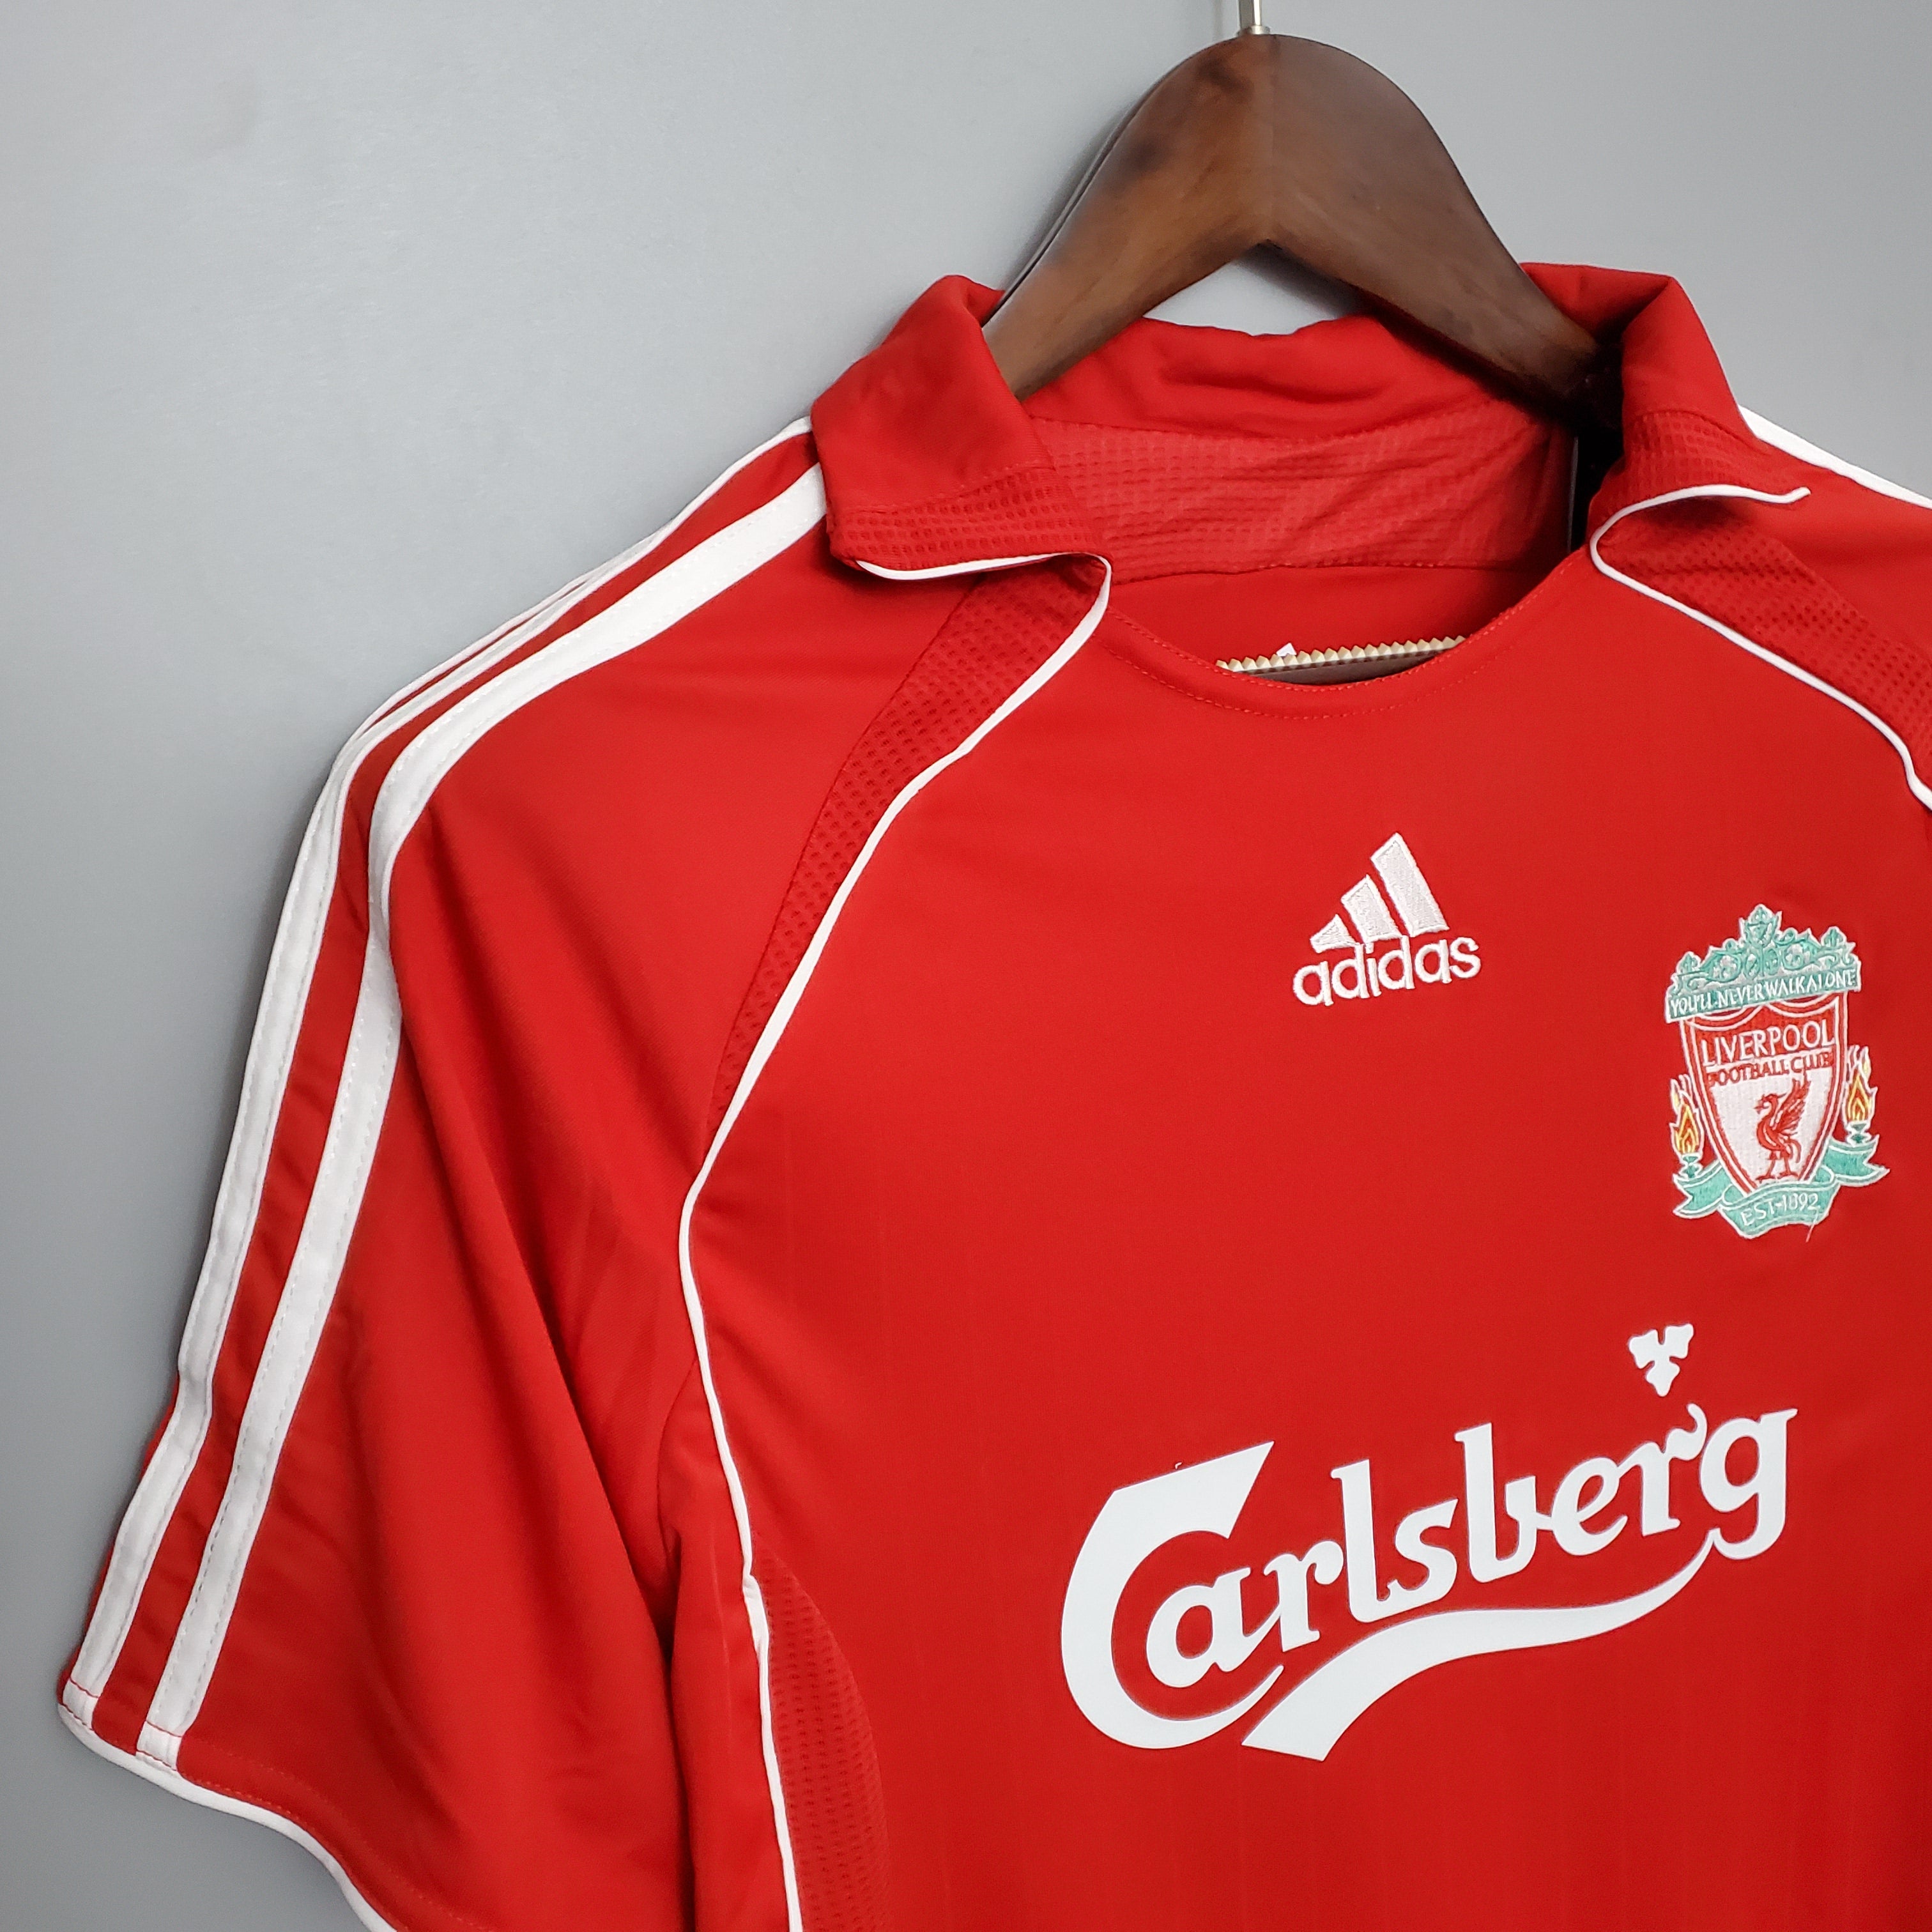 Liverpool retro shirt 06/07 